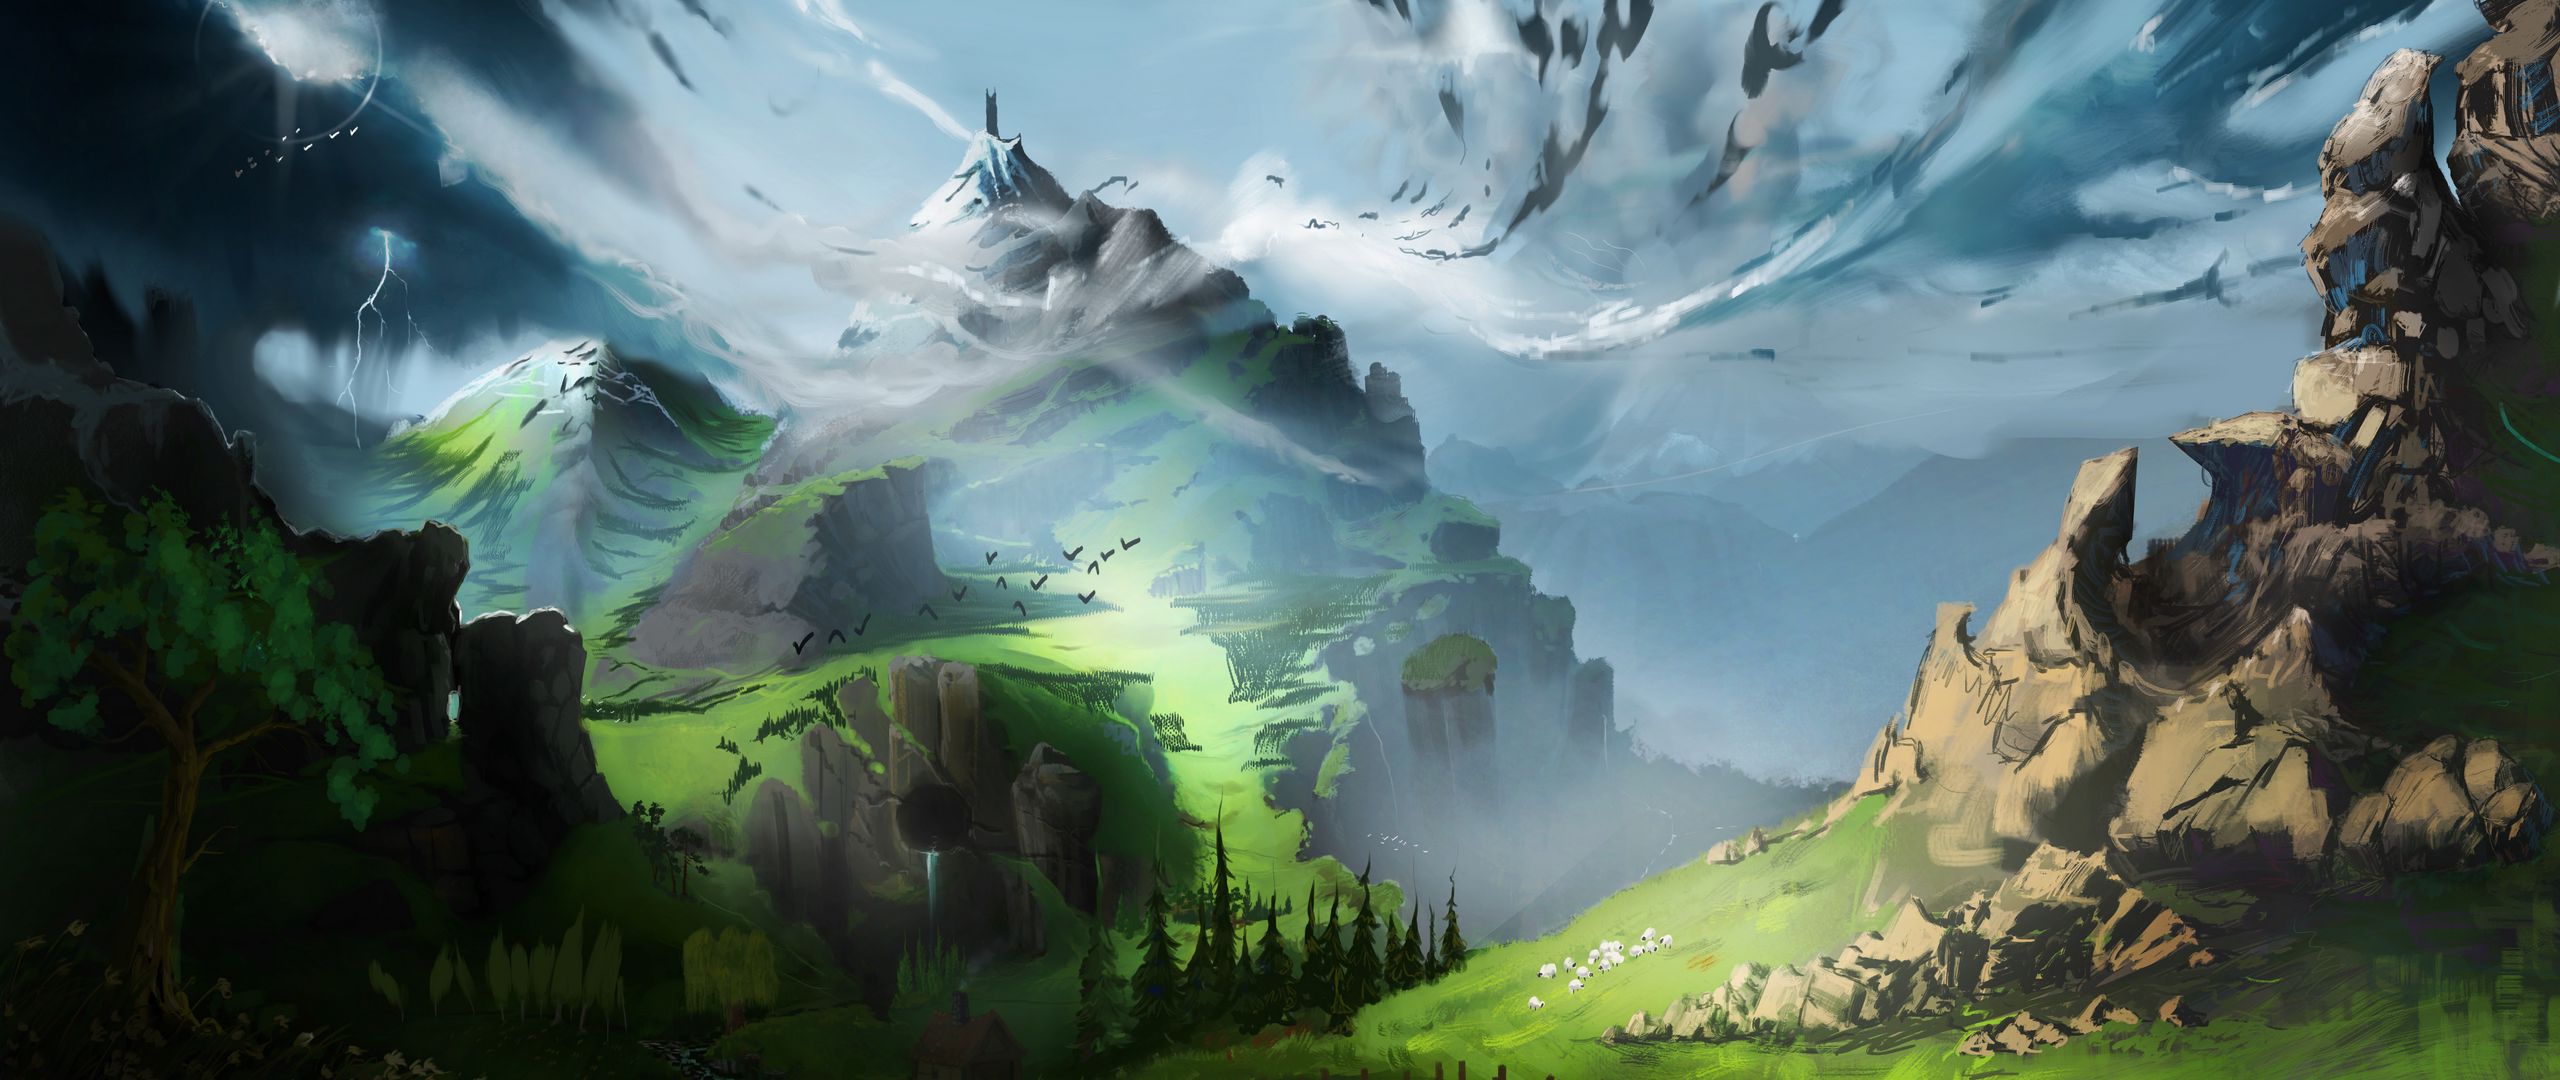 Download wallpaper 2560x1080 mountain, landscape, fantasy, art dual